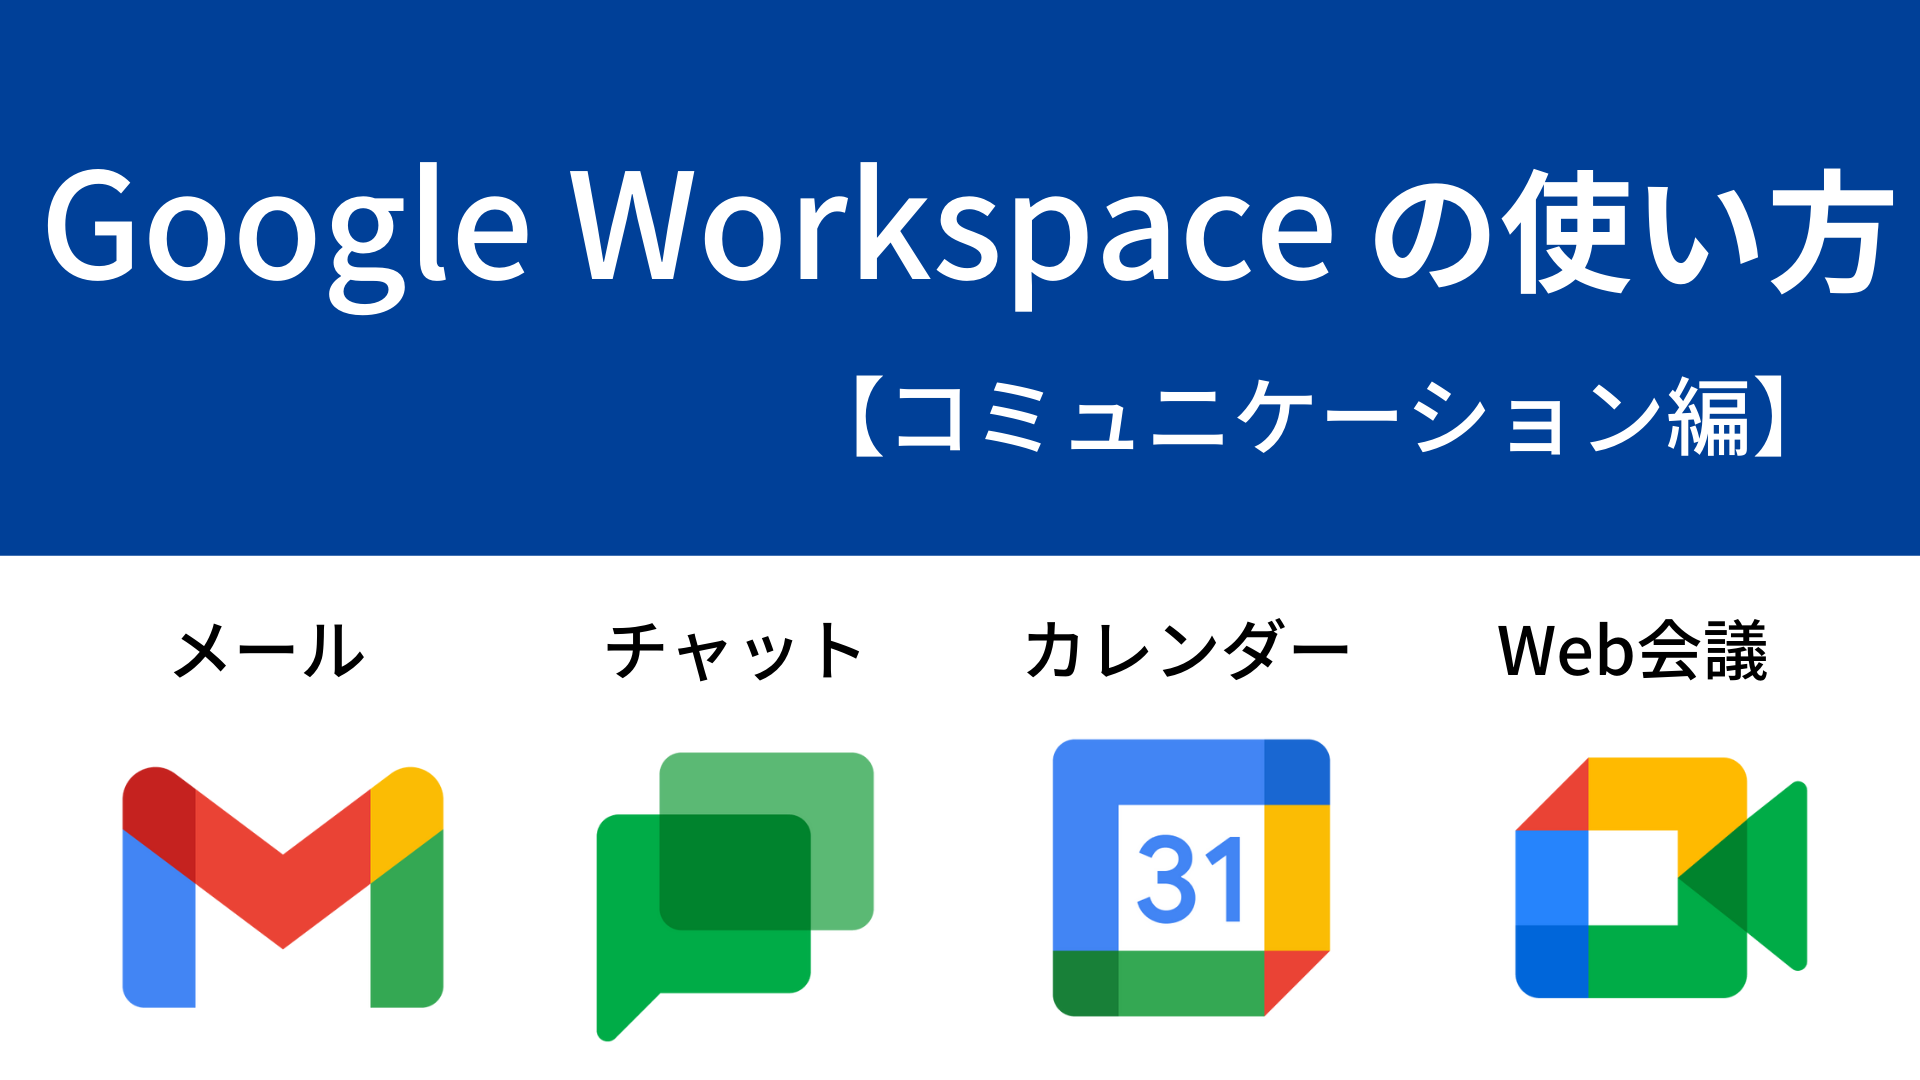 Google Workspace の使い方 ~コミュニケーション編~